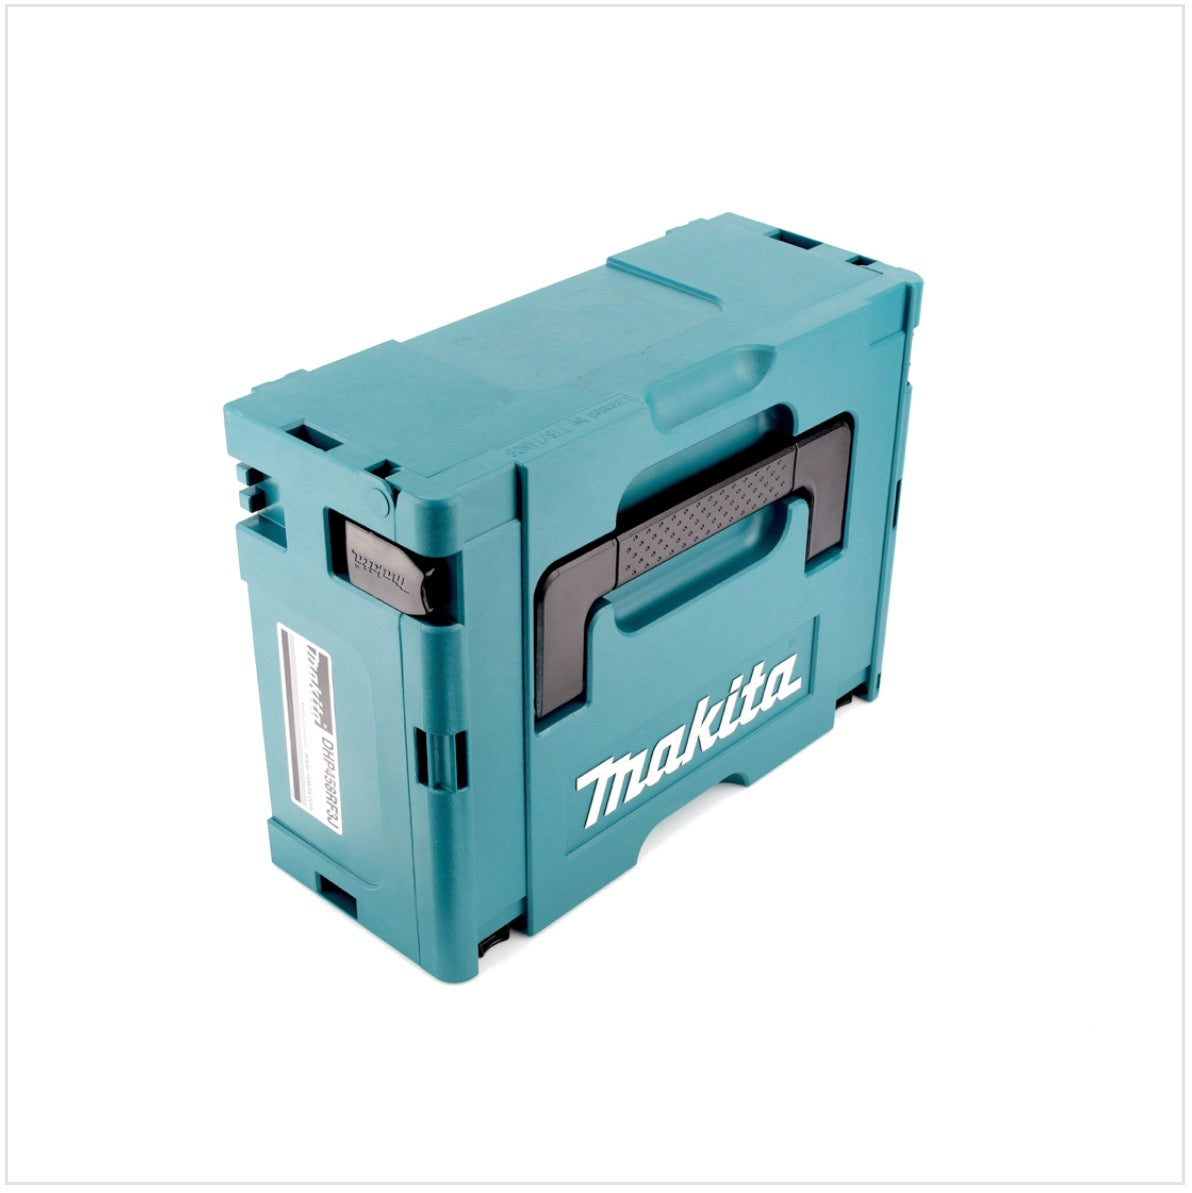 3x Makita Kunststoff Werkzeug Koffer MAKPAC 2 - ohne Einlage - Toolbrothers